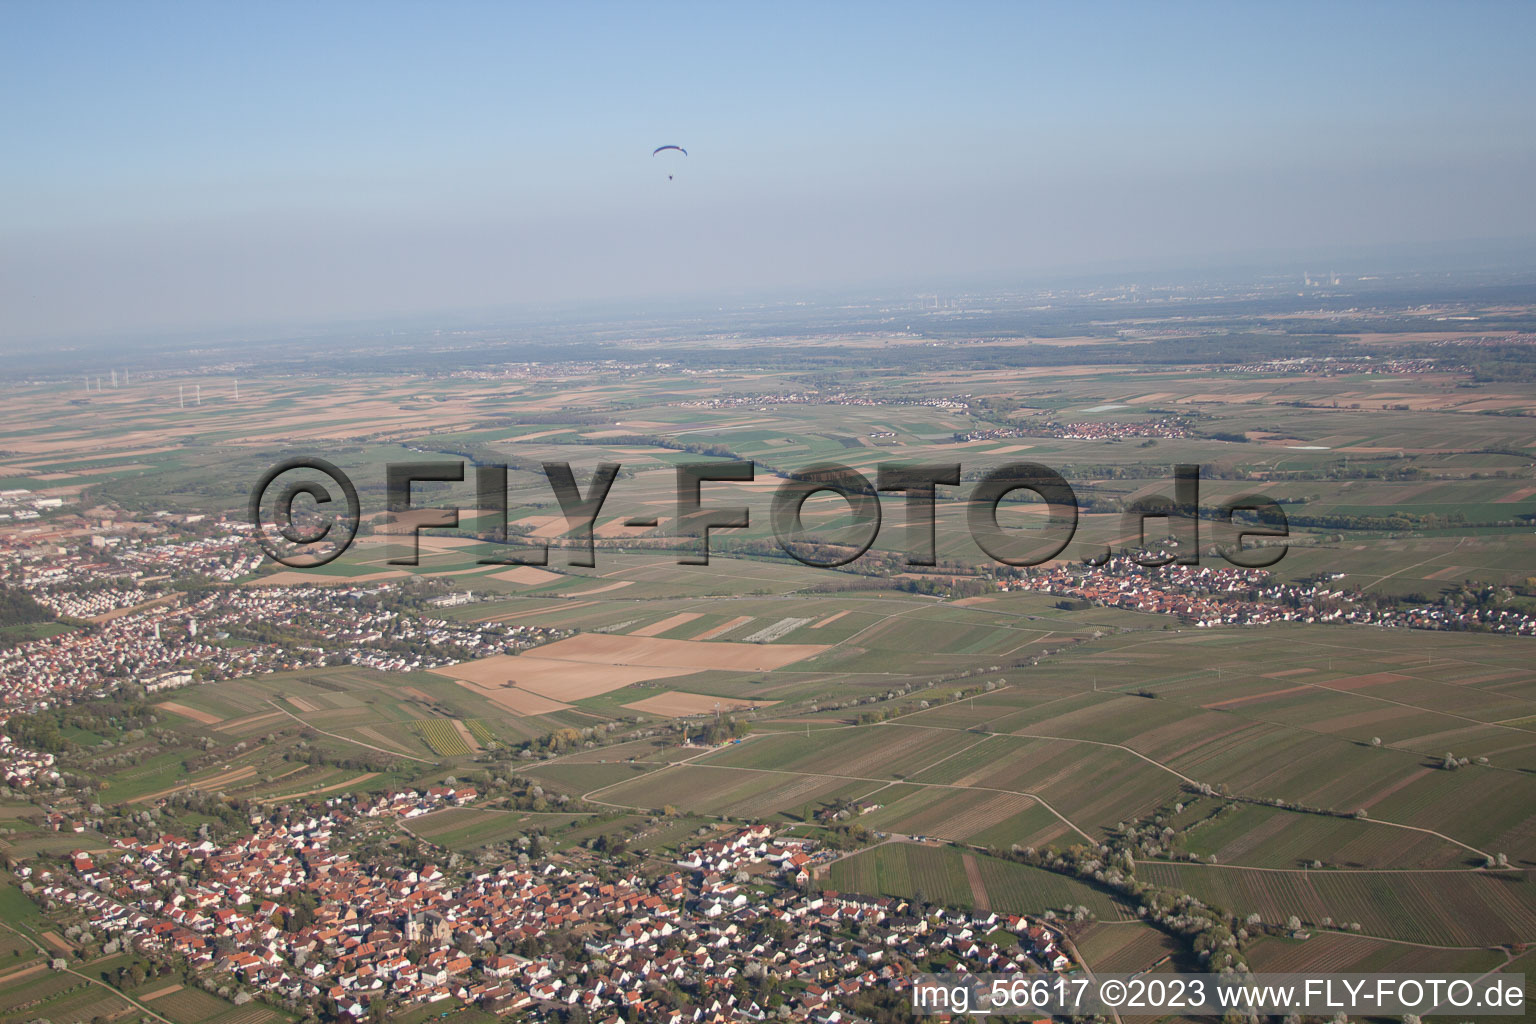 District Arzheim in Landau in der Pfalz in the state Rhineland-Palatinate, Germany viewn from the air